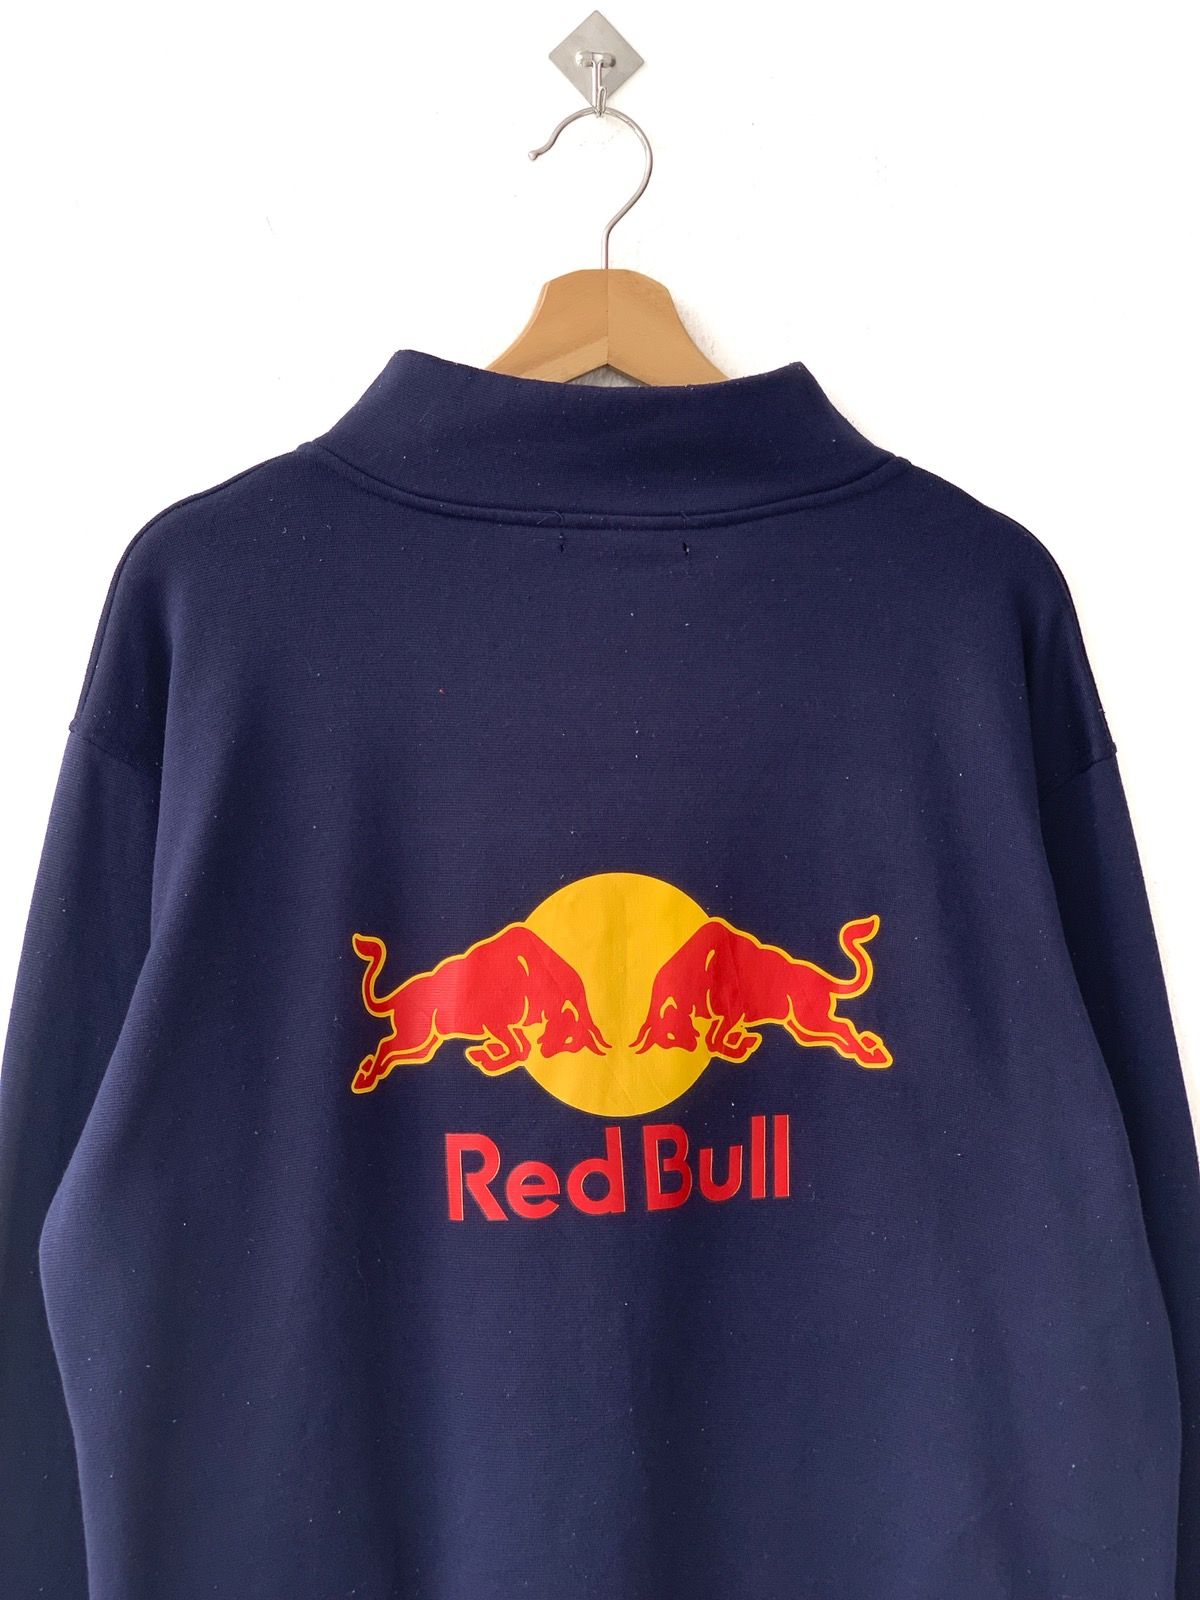 Red Bull Vintage Red Bull Sweatshirt Size US XL / EU 56 / 4 - 3 Thumbnail